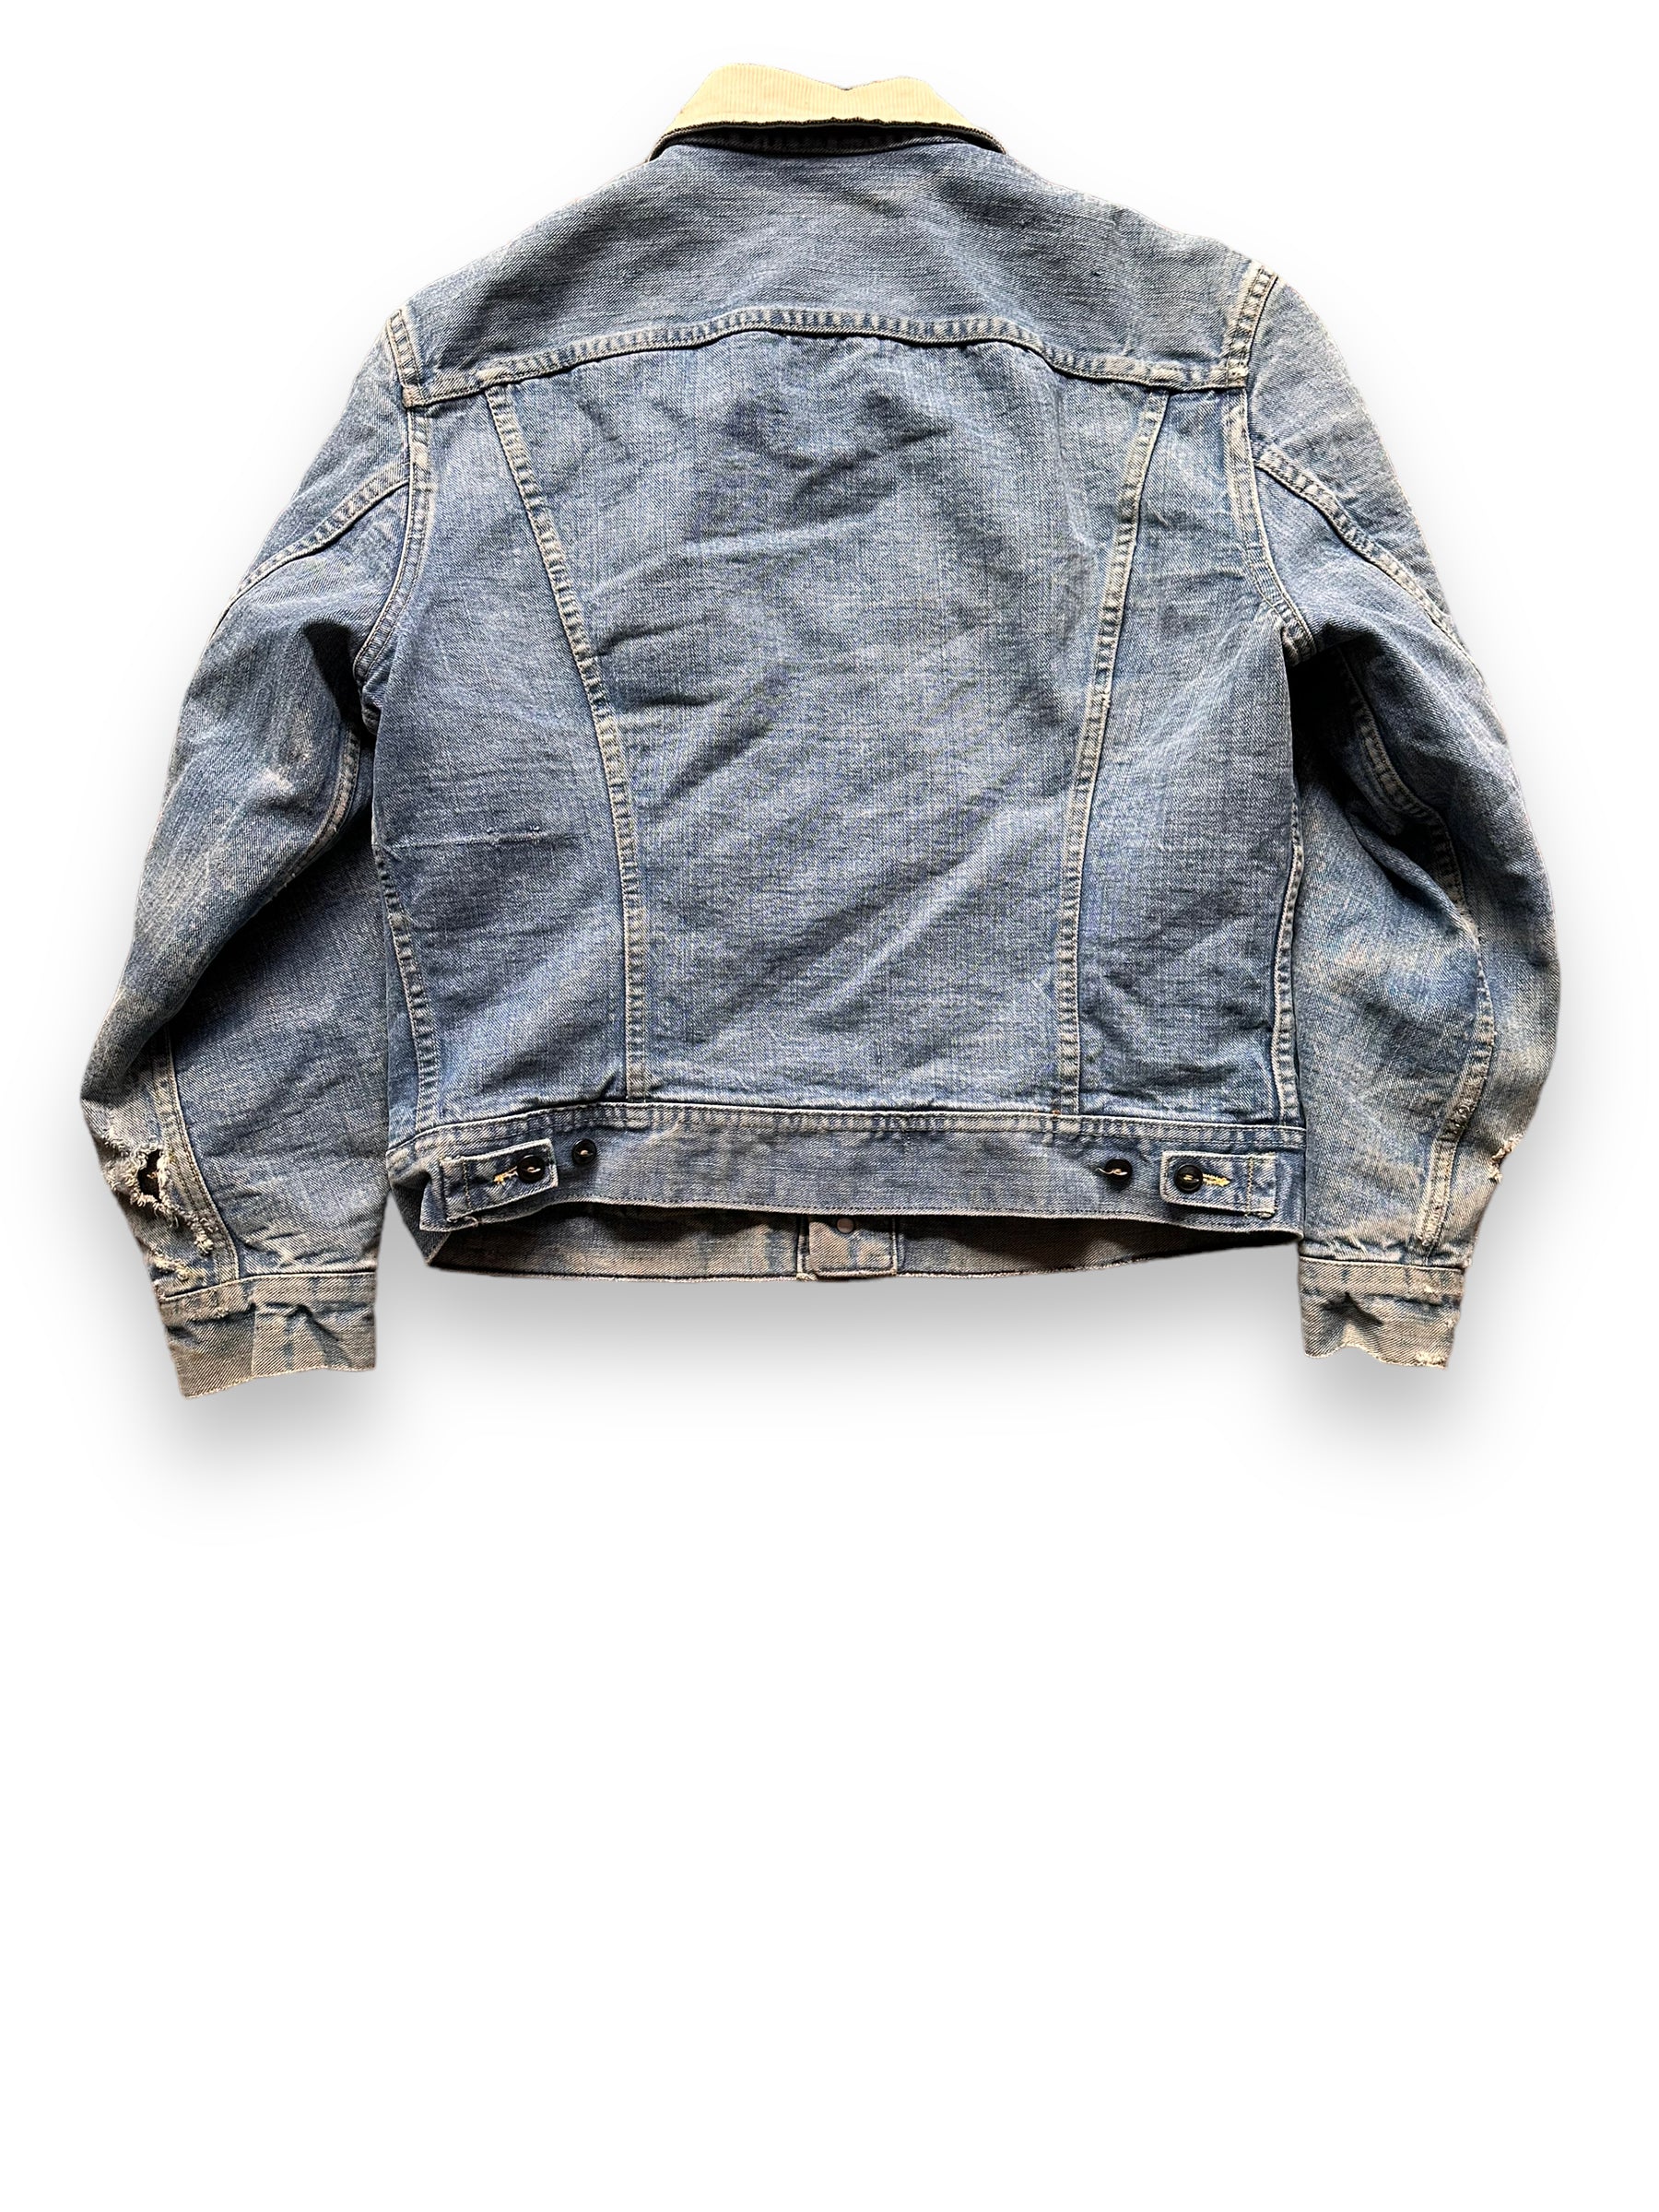 Rear View on Vintage Blanket Lined Lee Storm Rider Denim Jacket SZ L| Barn Owl Vintage | Seattle True Vintage Workwear